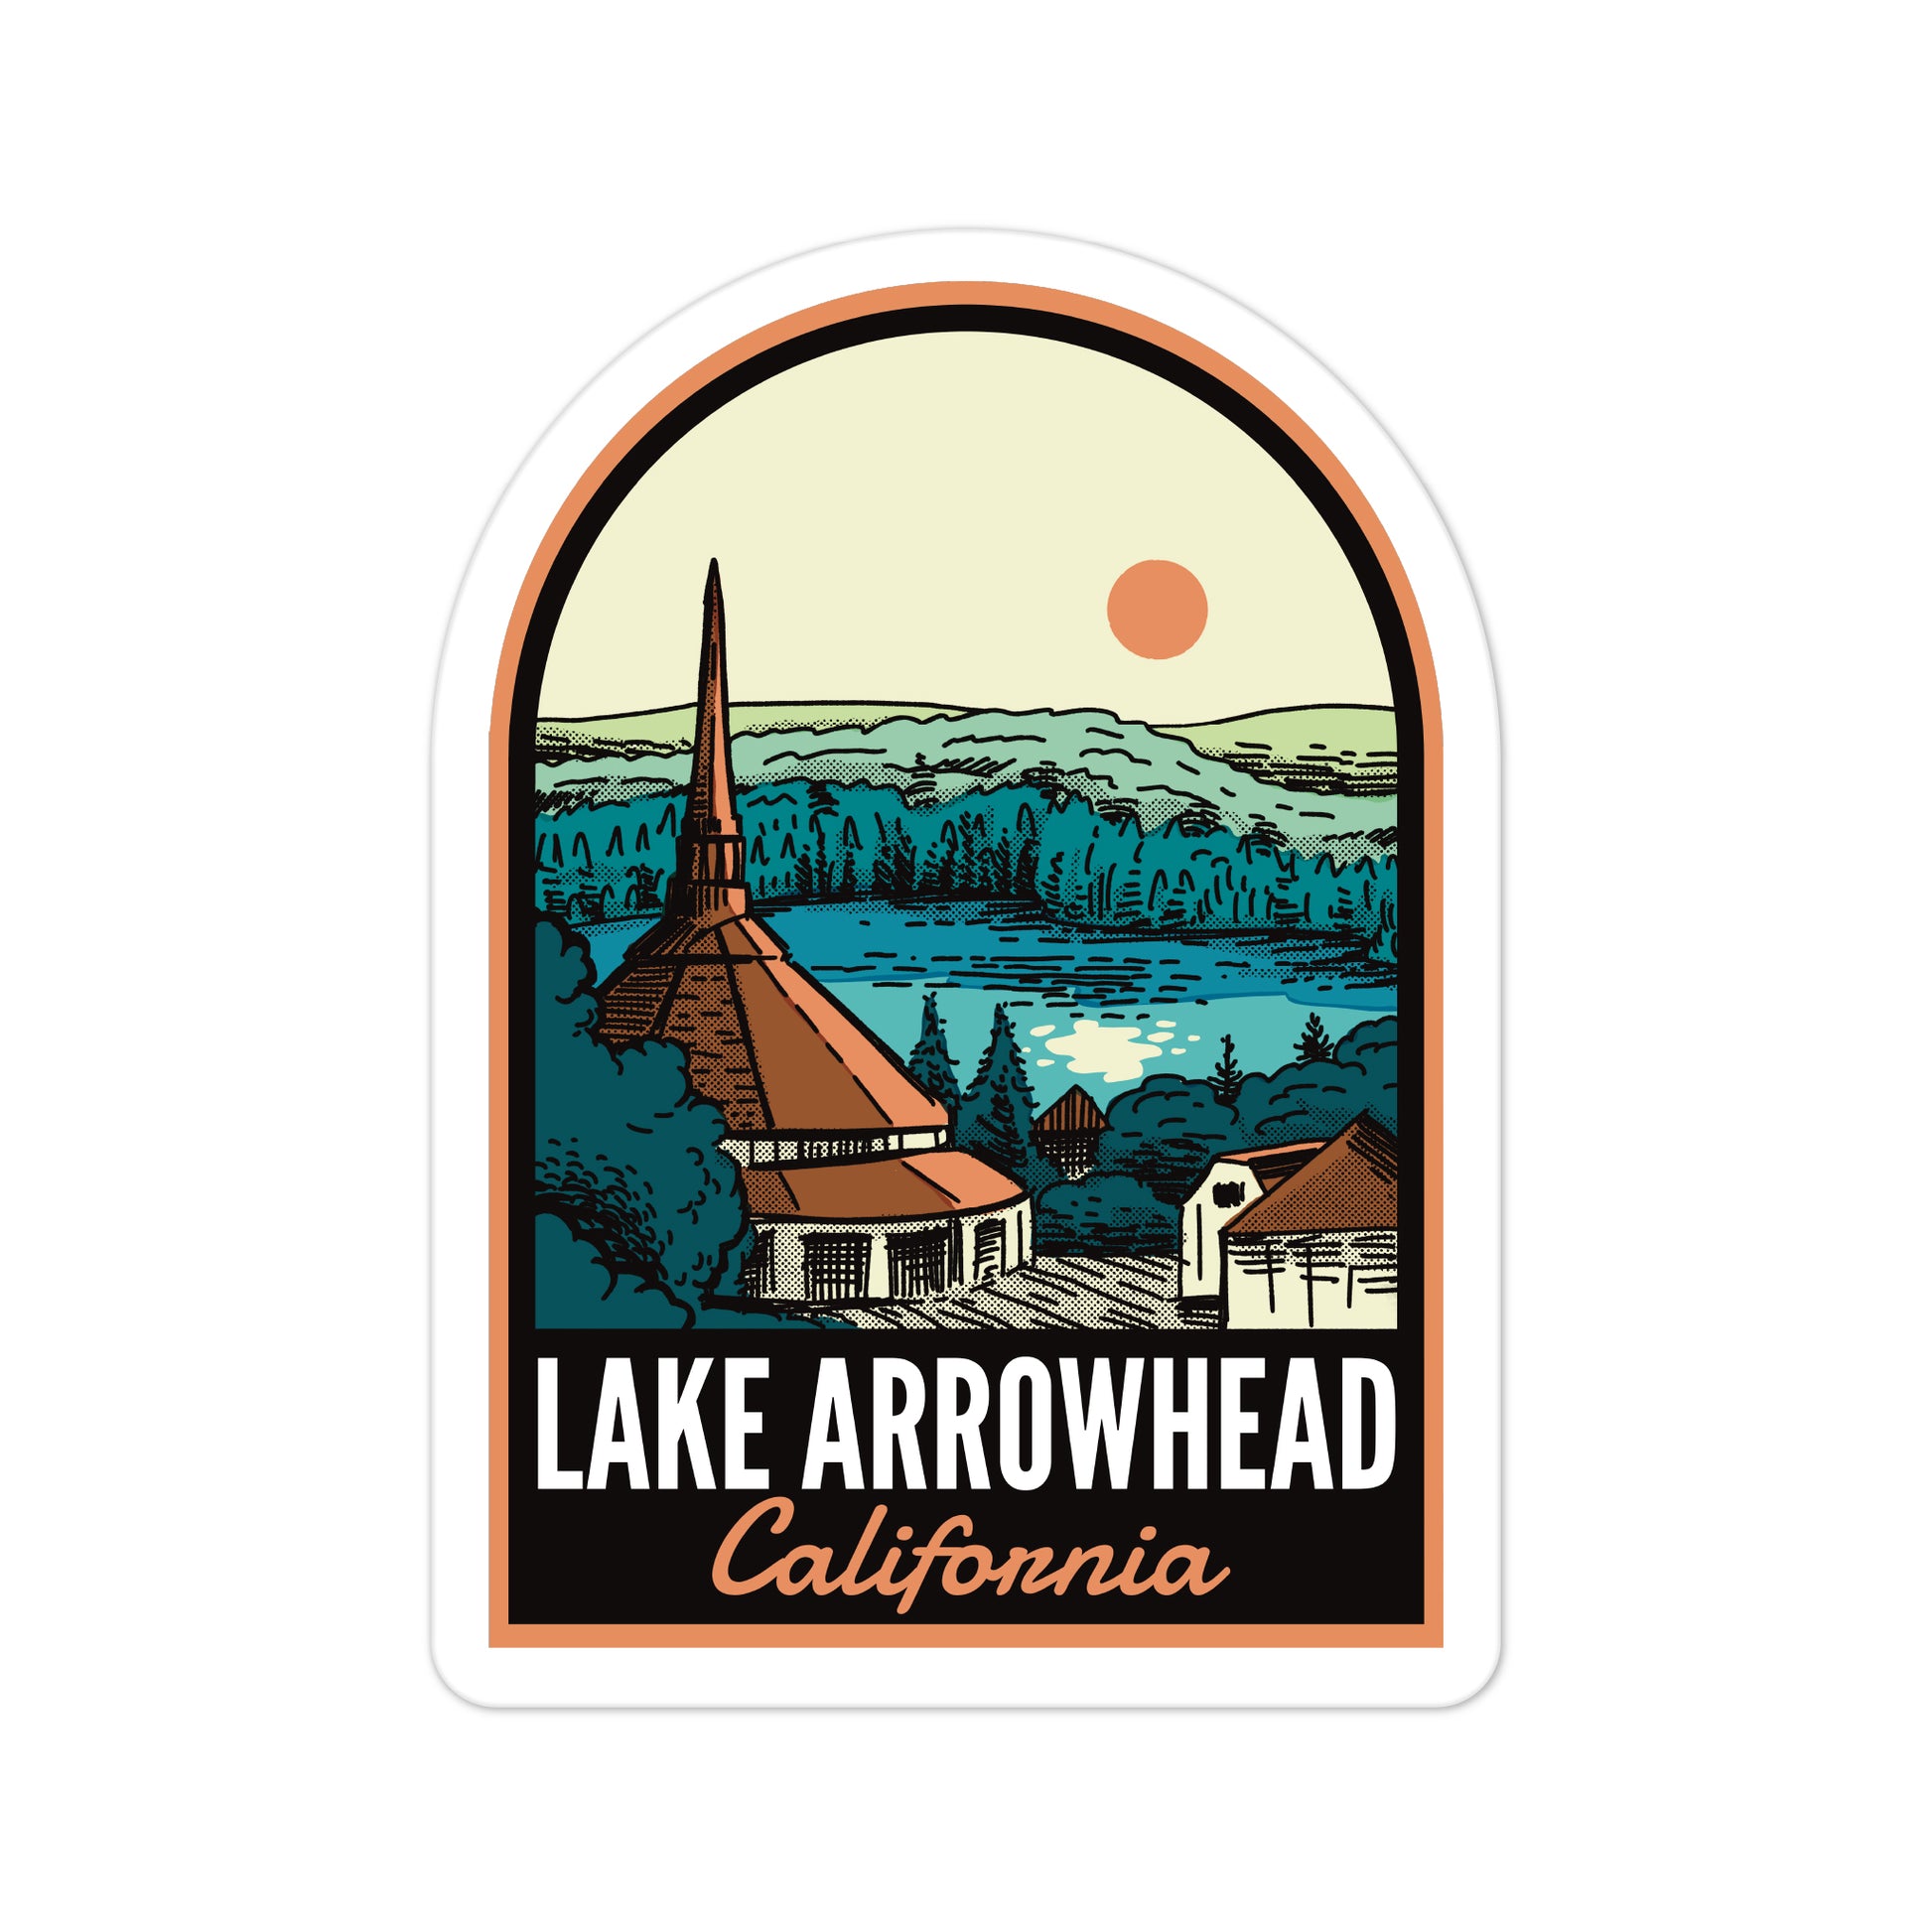 A sticker of Lake Arrowhead California